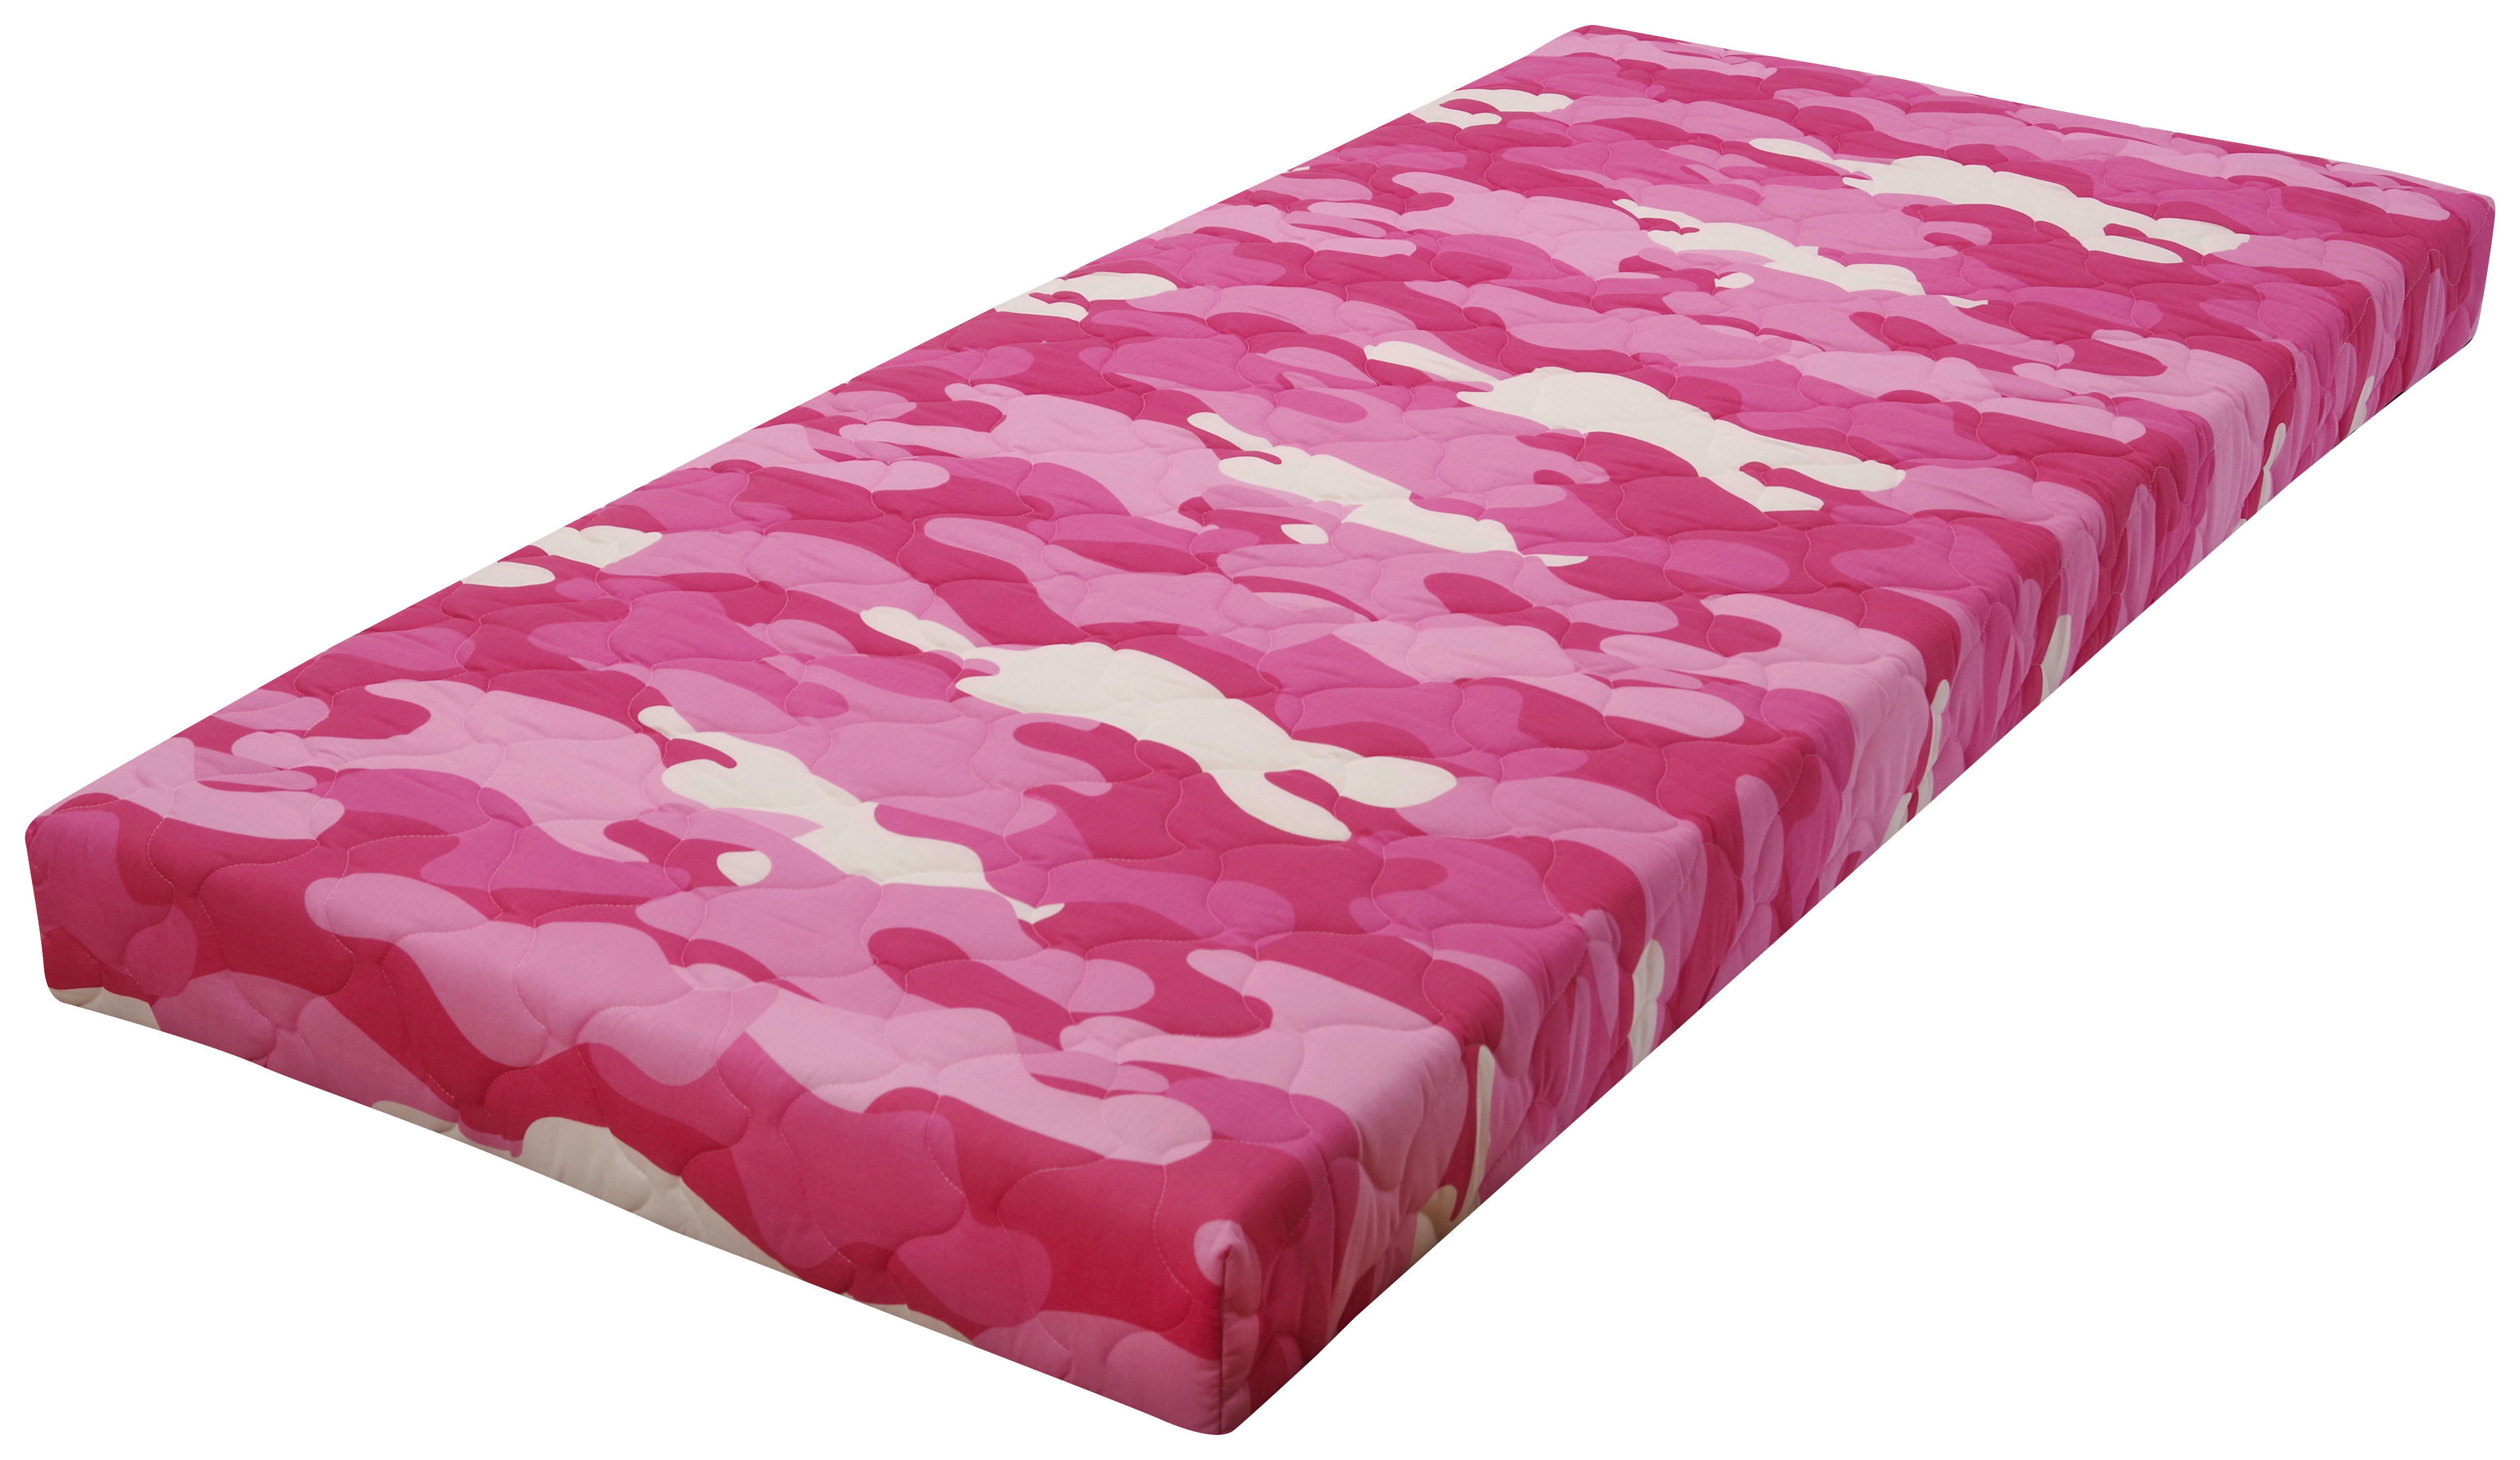 Bonellfederkernmatratze Military pink Liegefläche B/L: ca. 90x200 cm Military - pink (90,00/14,00/200,00cm)